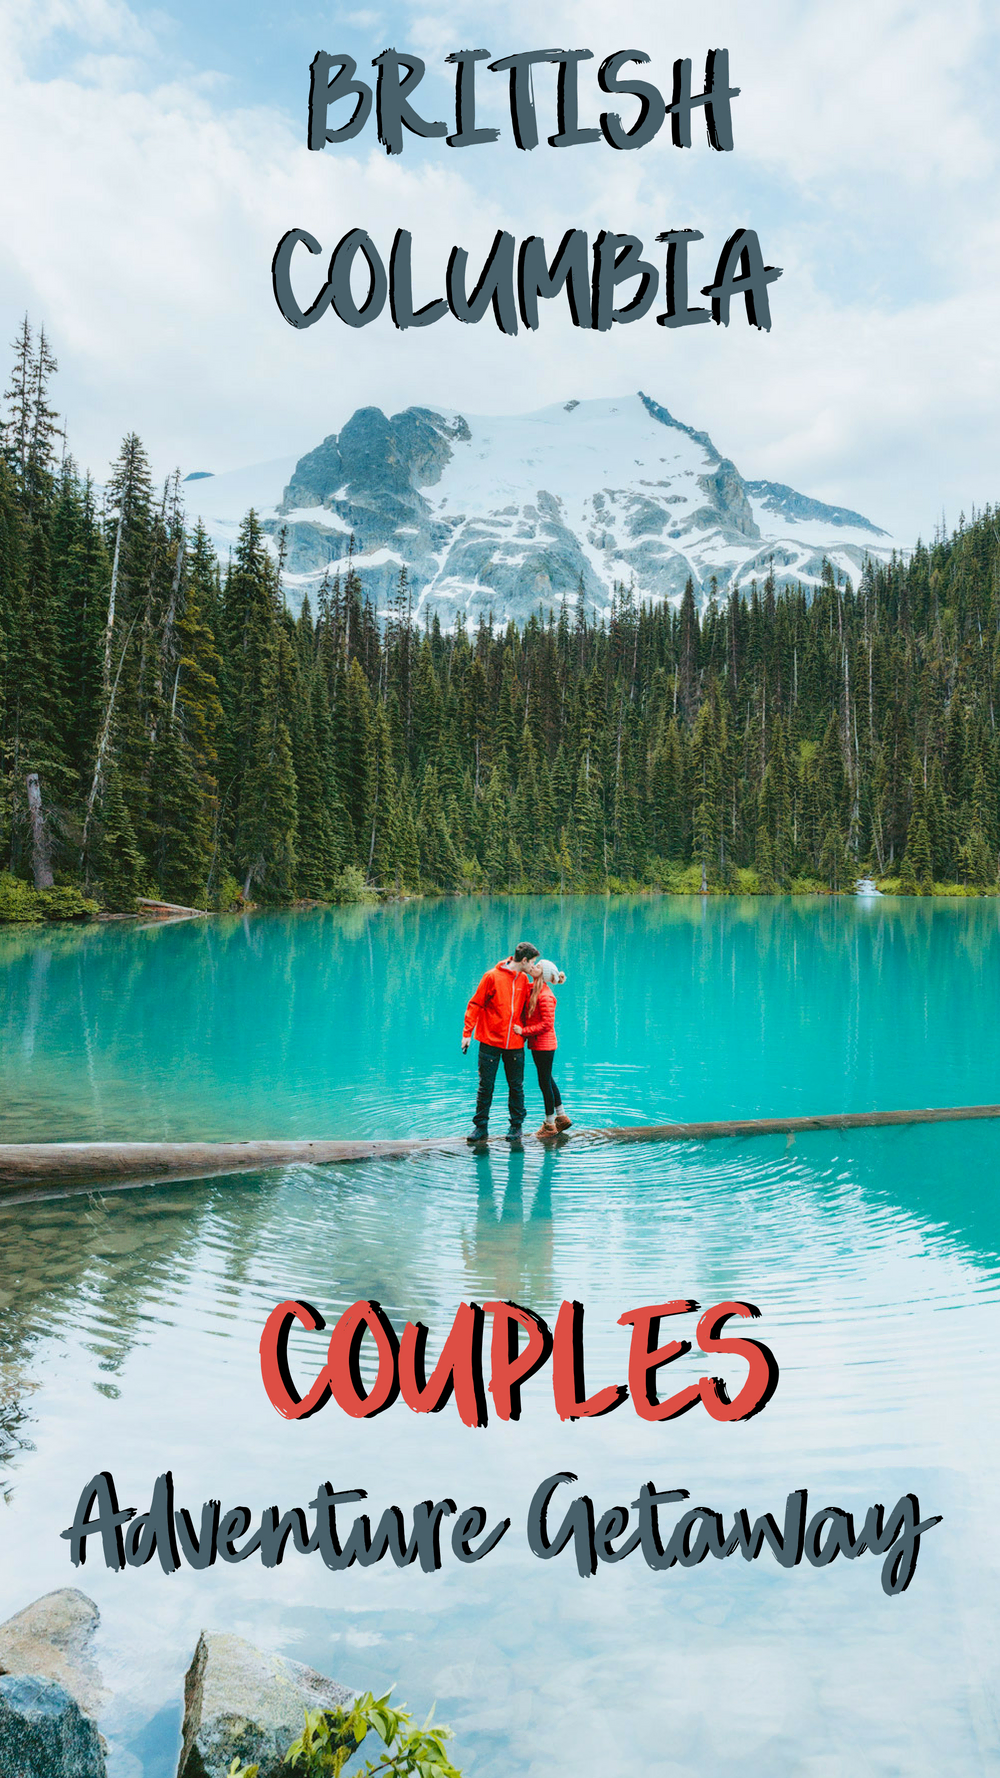 Couples Adventure Getaway to British Columbia PIN